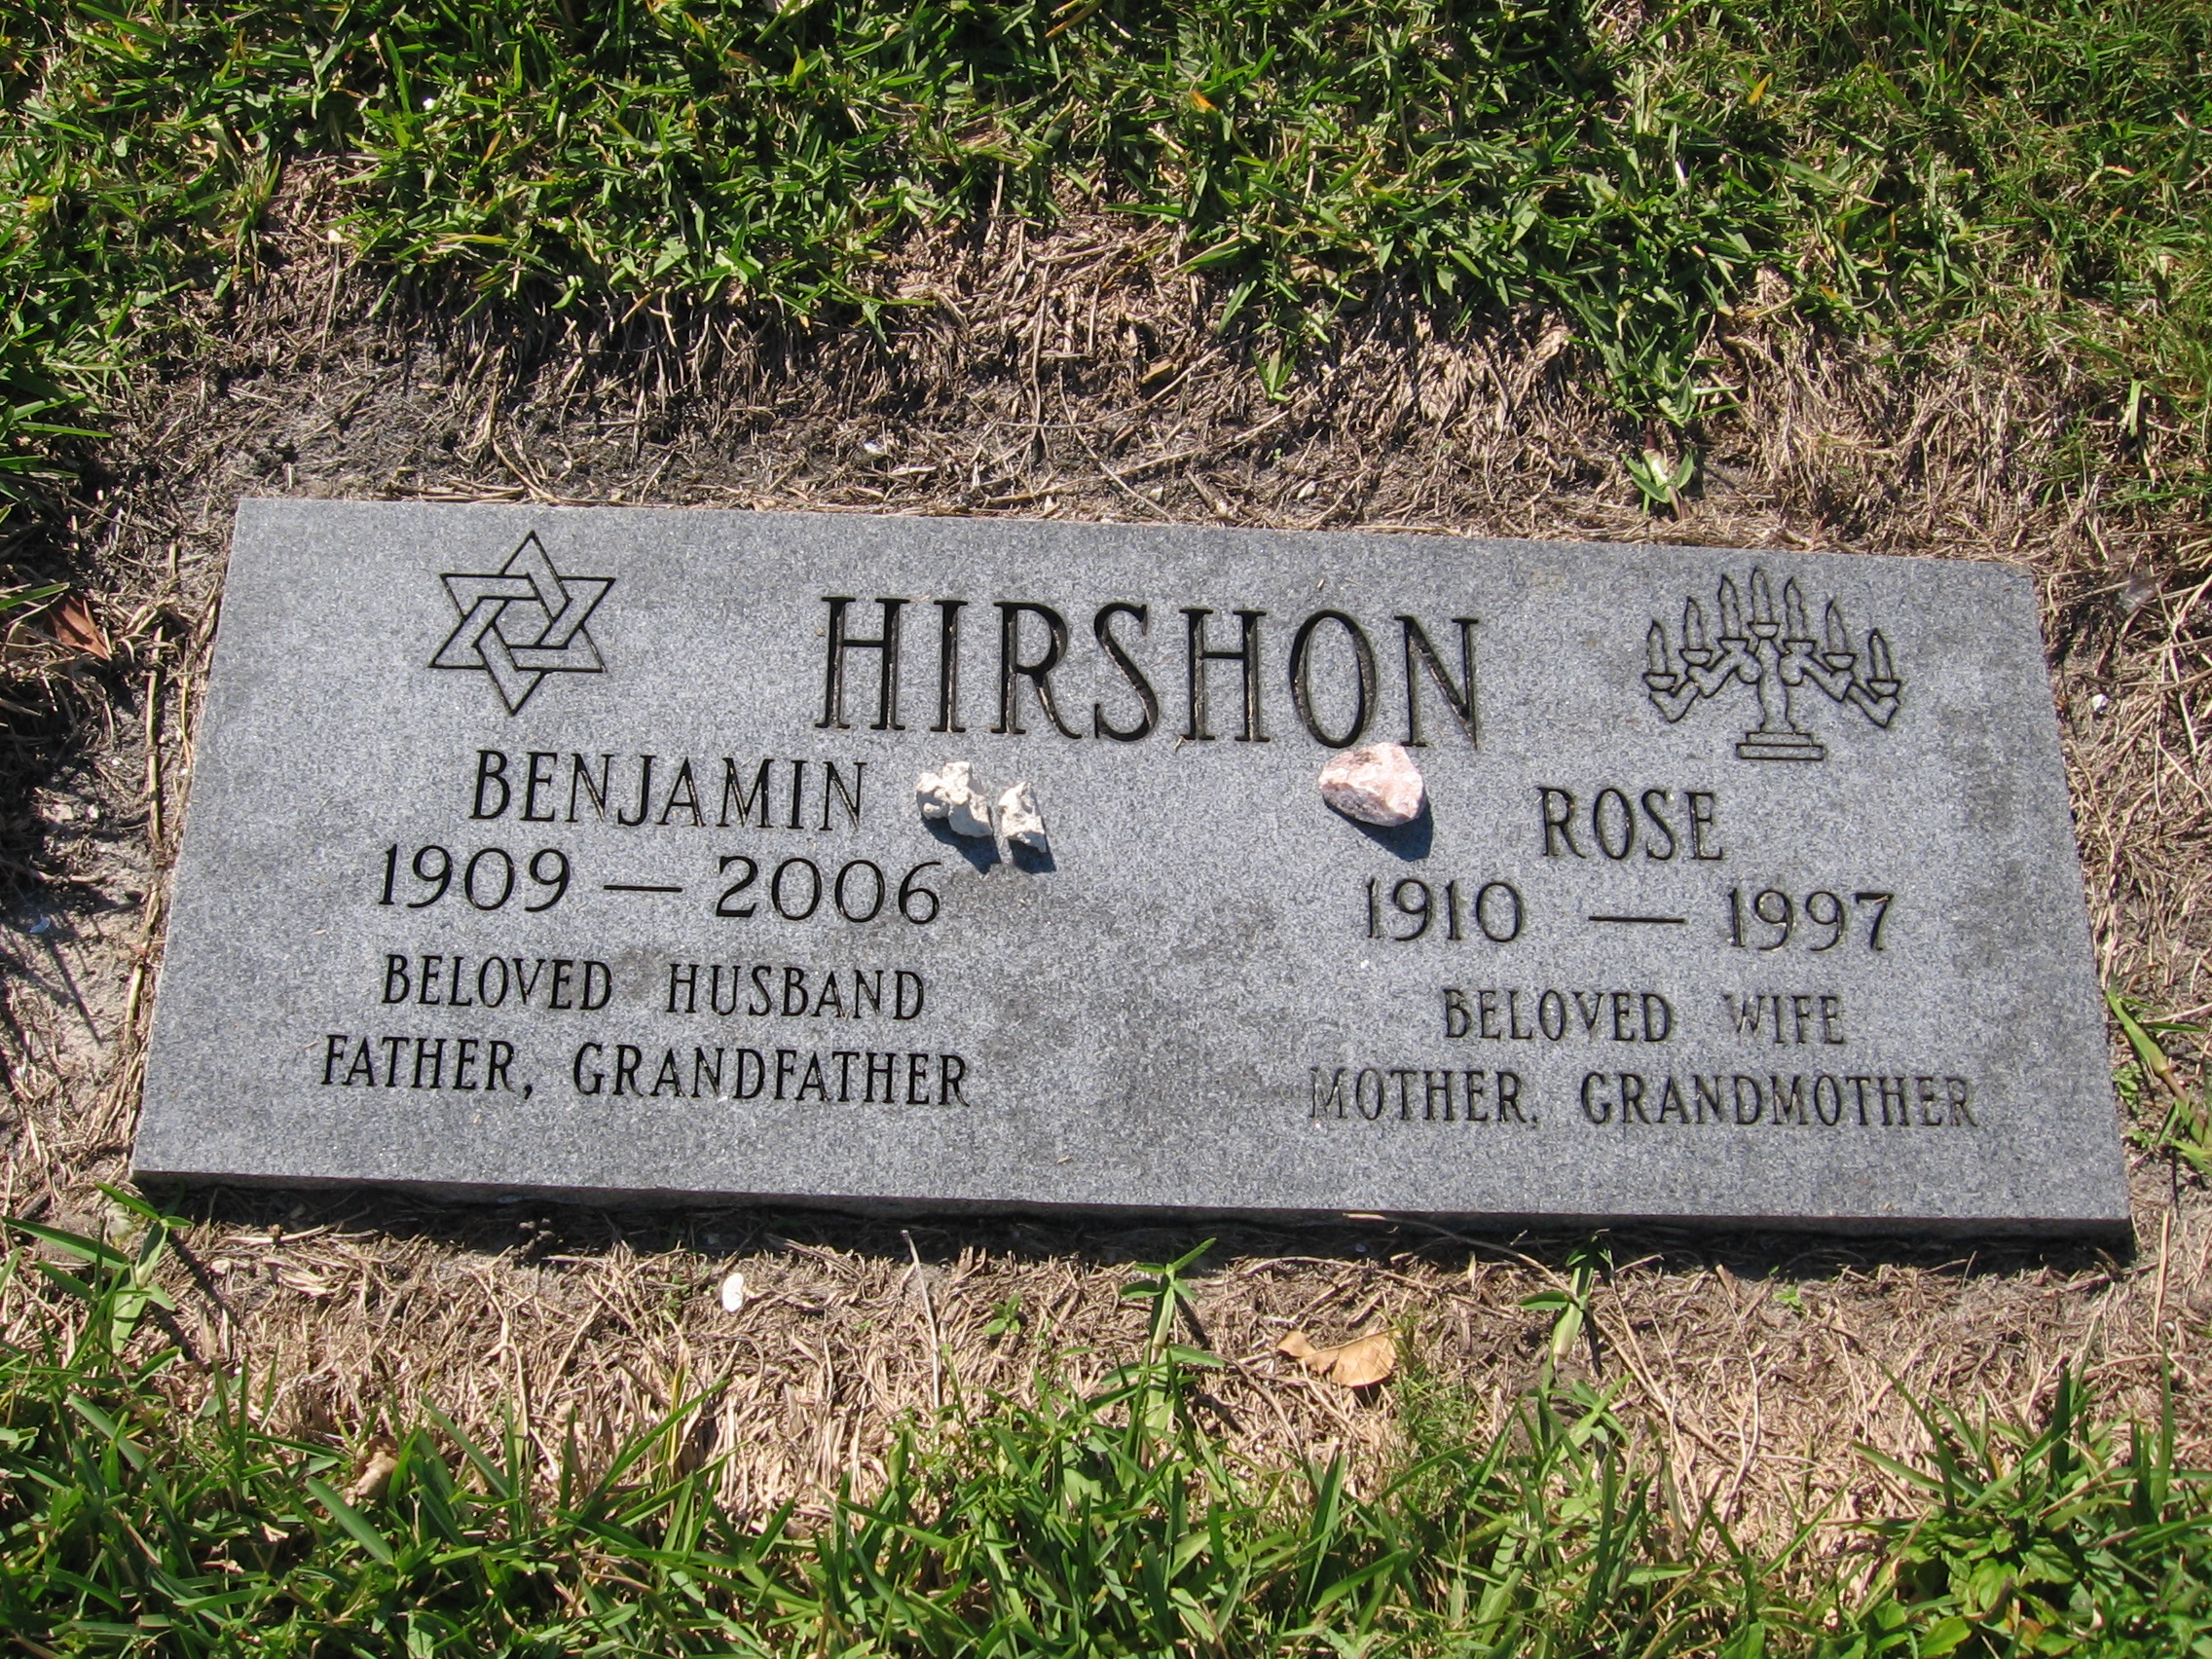 Benjamin Hirshon